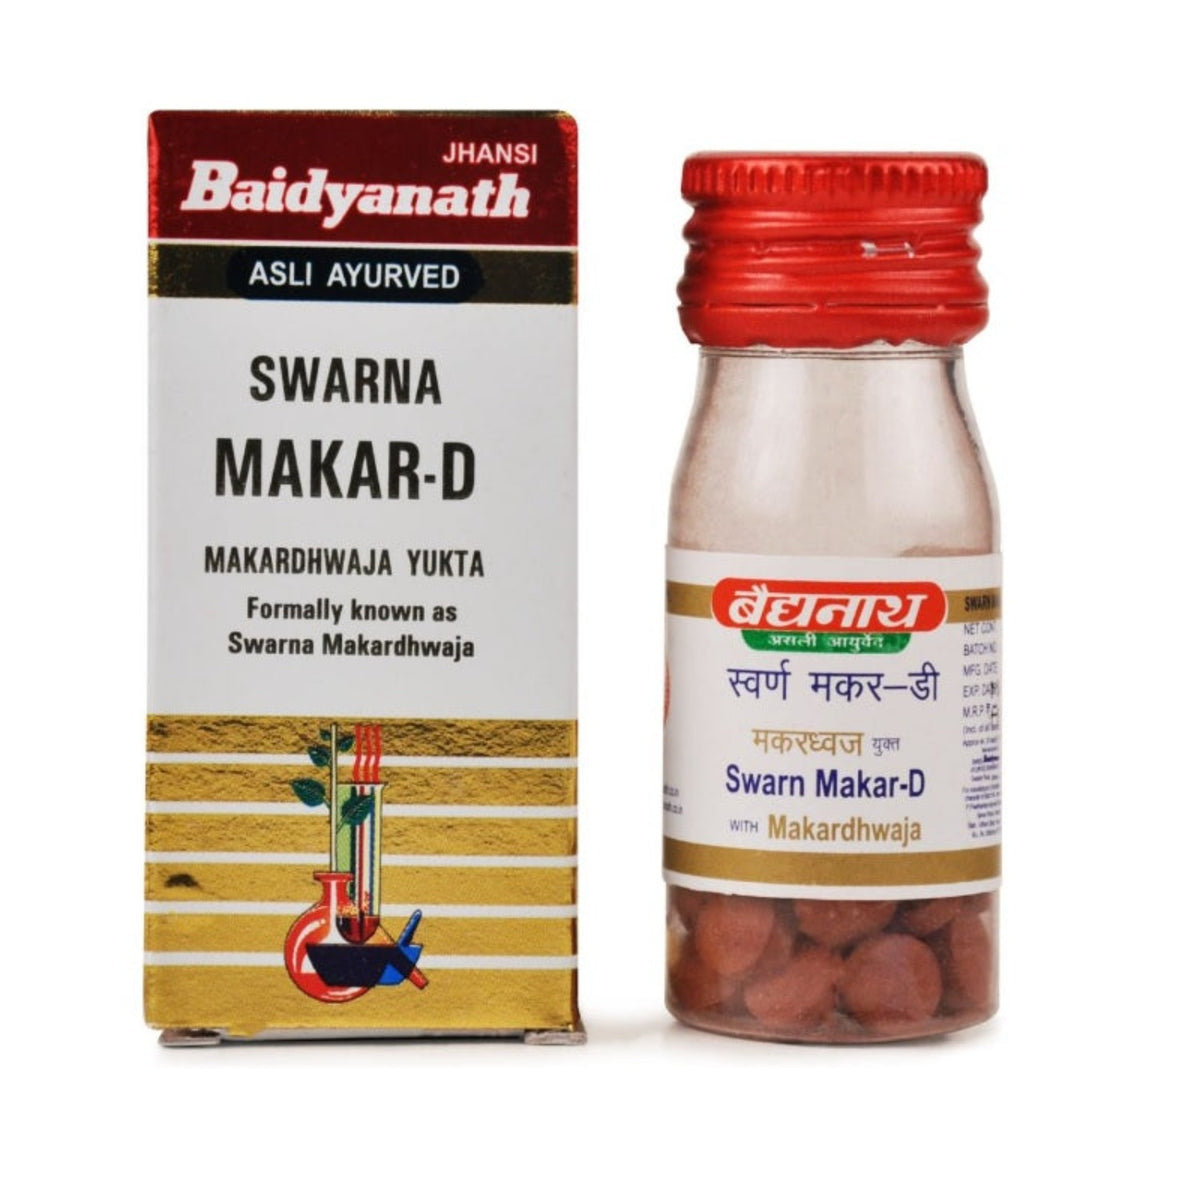 Baidyanath Ayurvedic (Jhansi) Swarna Makar-D Makardhwaja Yukta Tablets